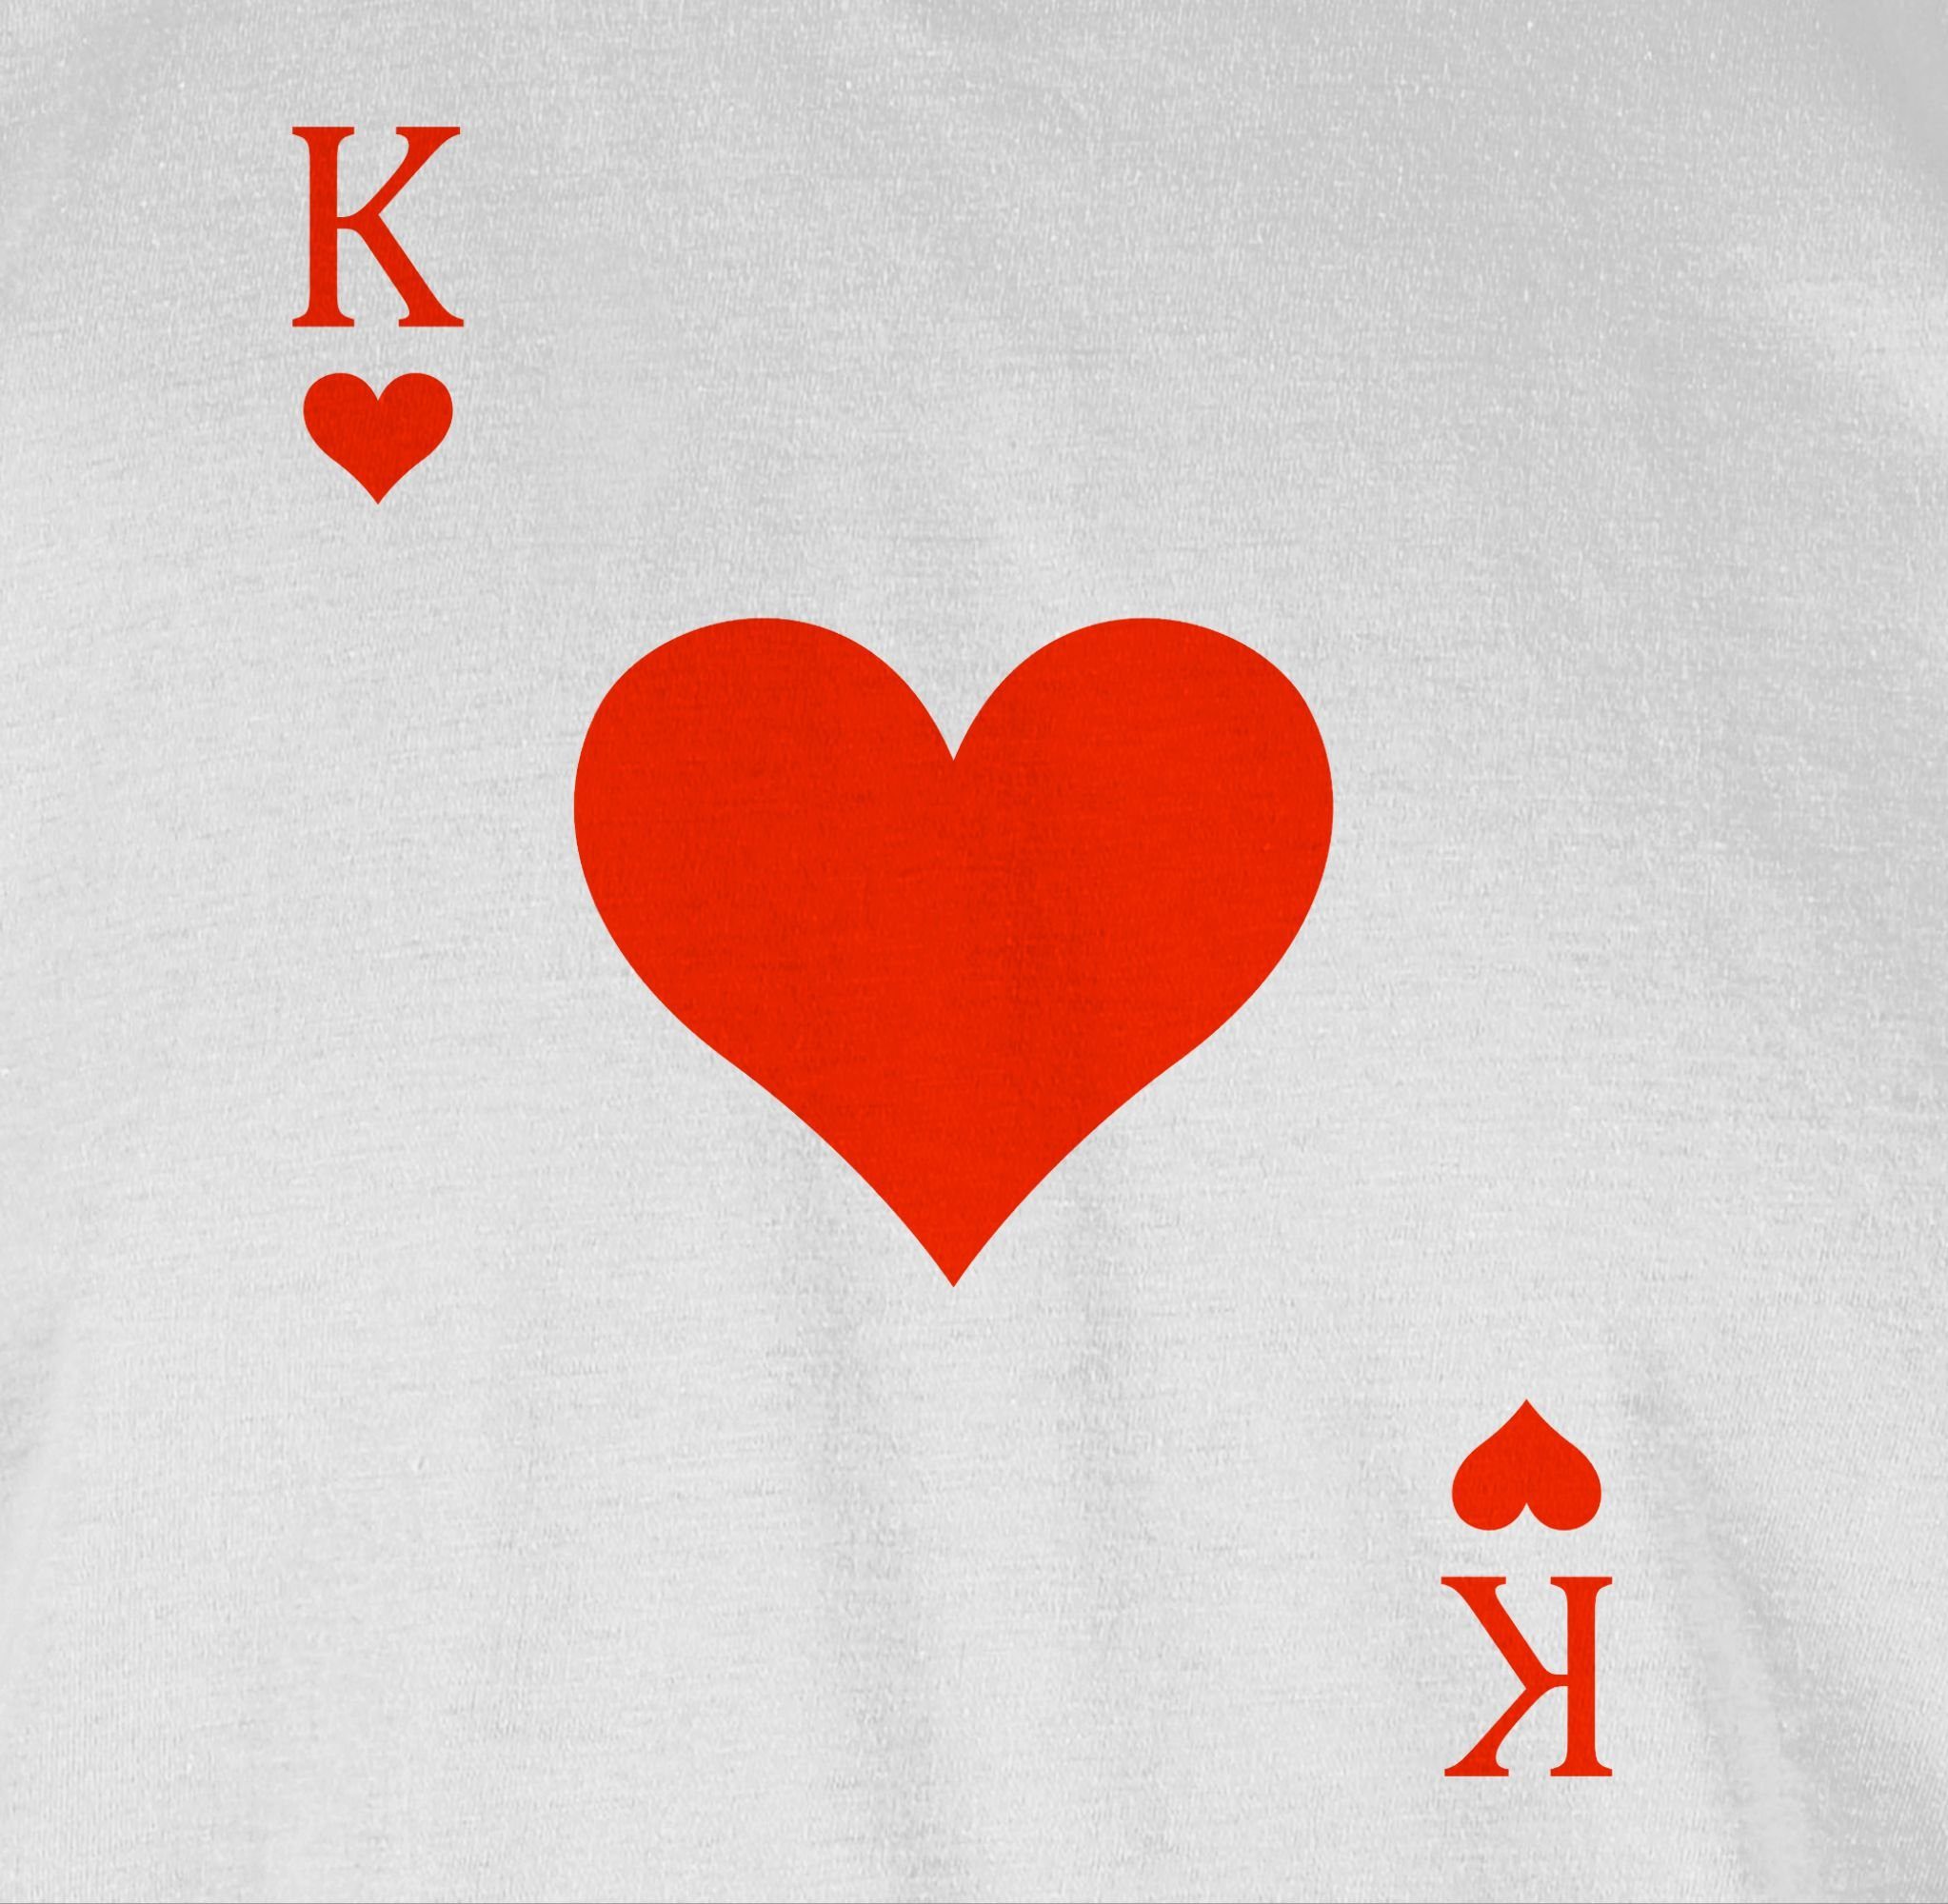 Kartenspiel - Spielkarte Queen King Herzkönig He - T-Shirt Karneval 2 Fasching Weiß Herz König Shirtracer Karneval &